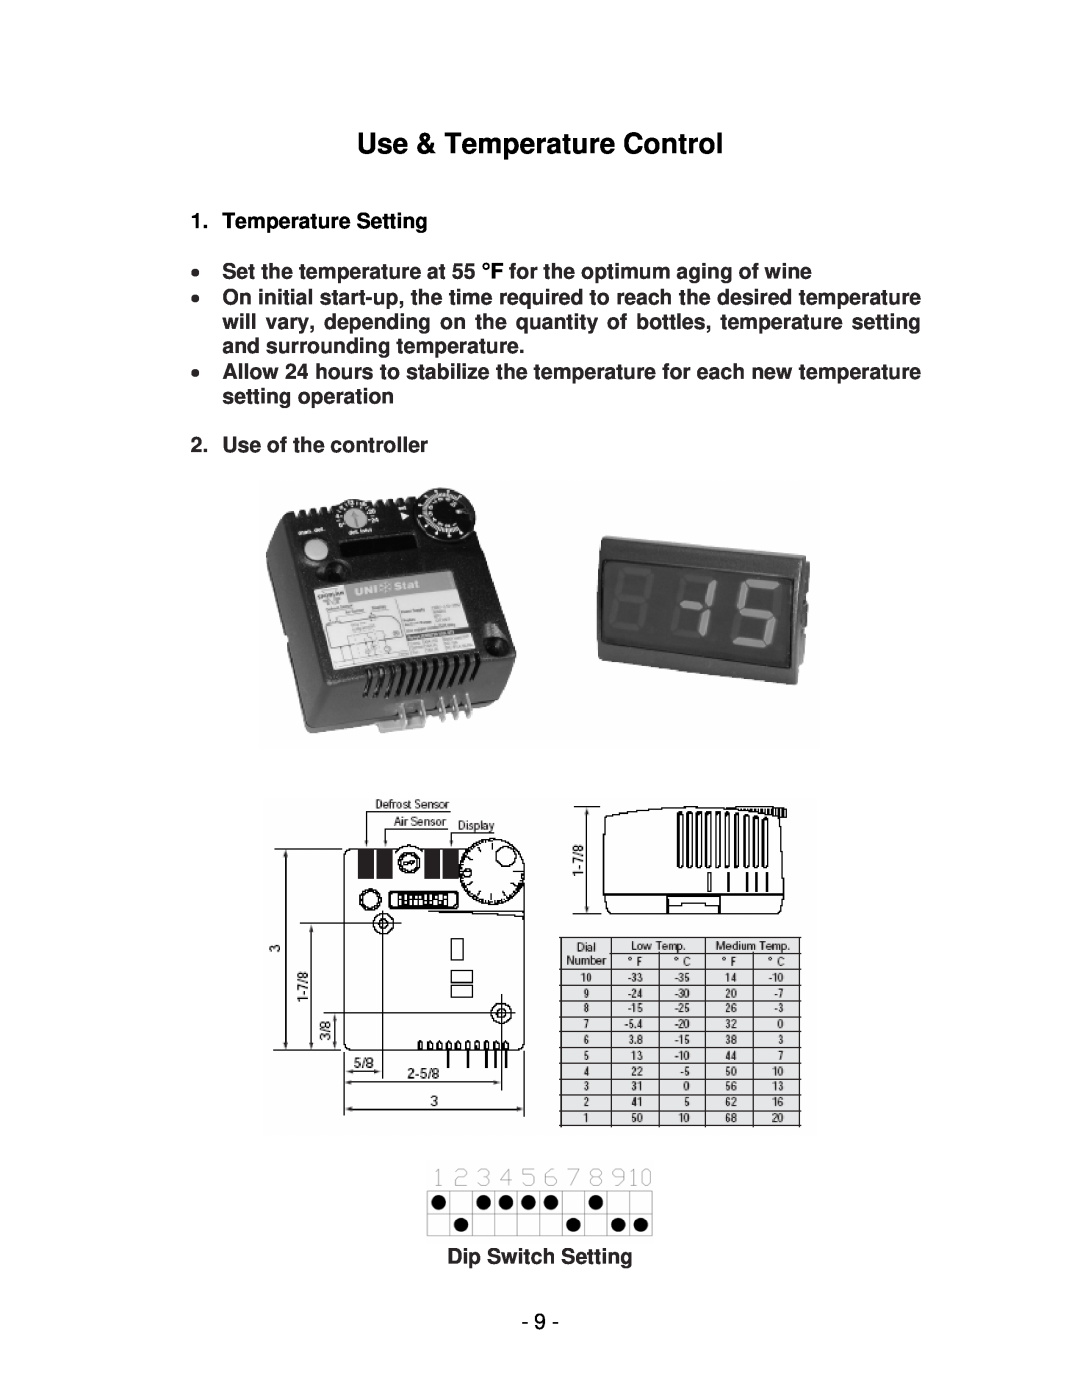 Vinotemp 4500SSH, 8500SSH, WM 6500SSH, WM 2500SSH manual Use & Temperature Control, Temperature Setting 